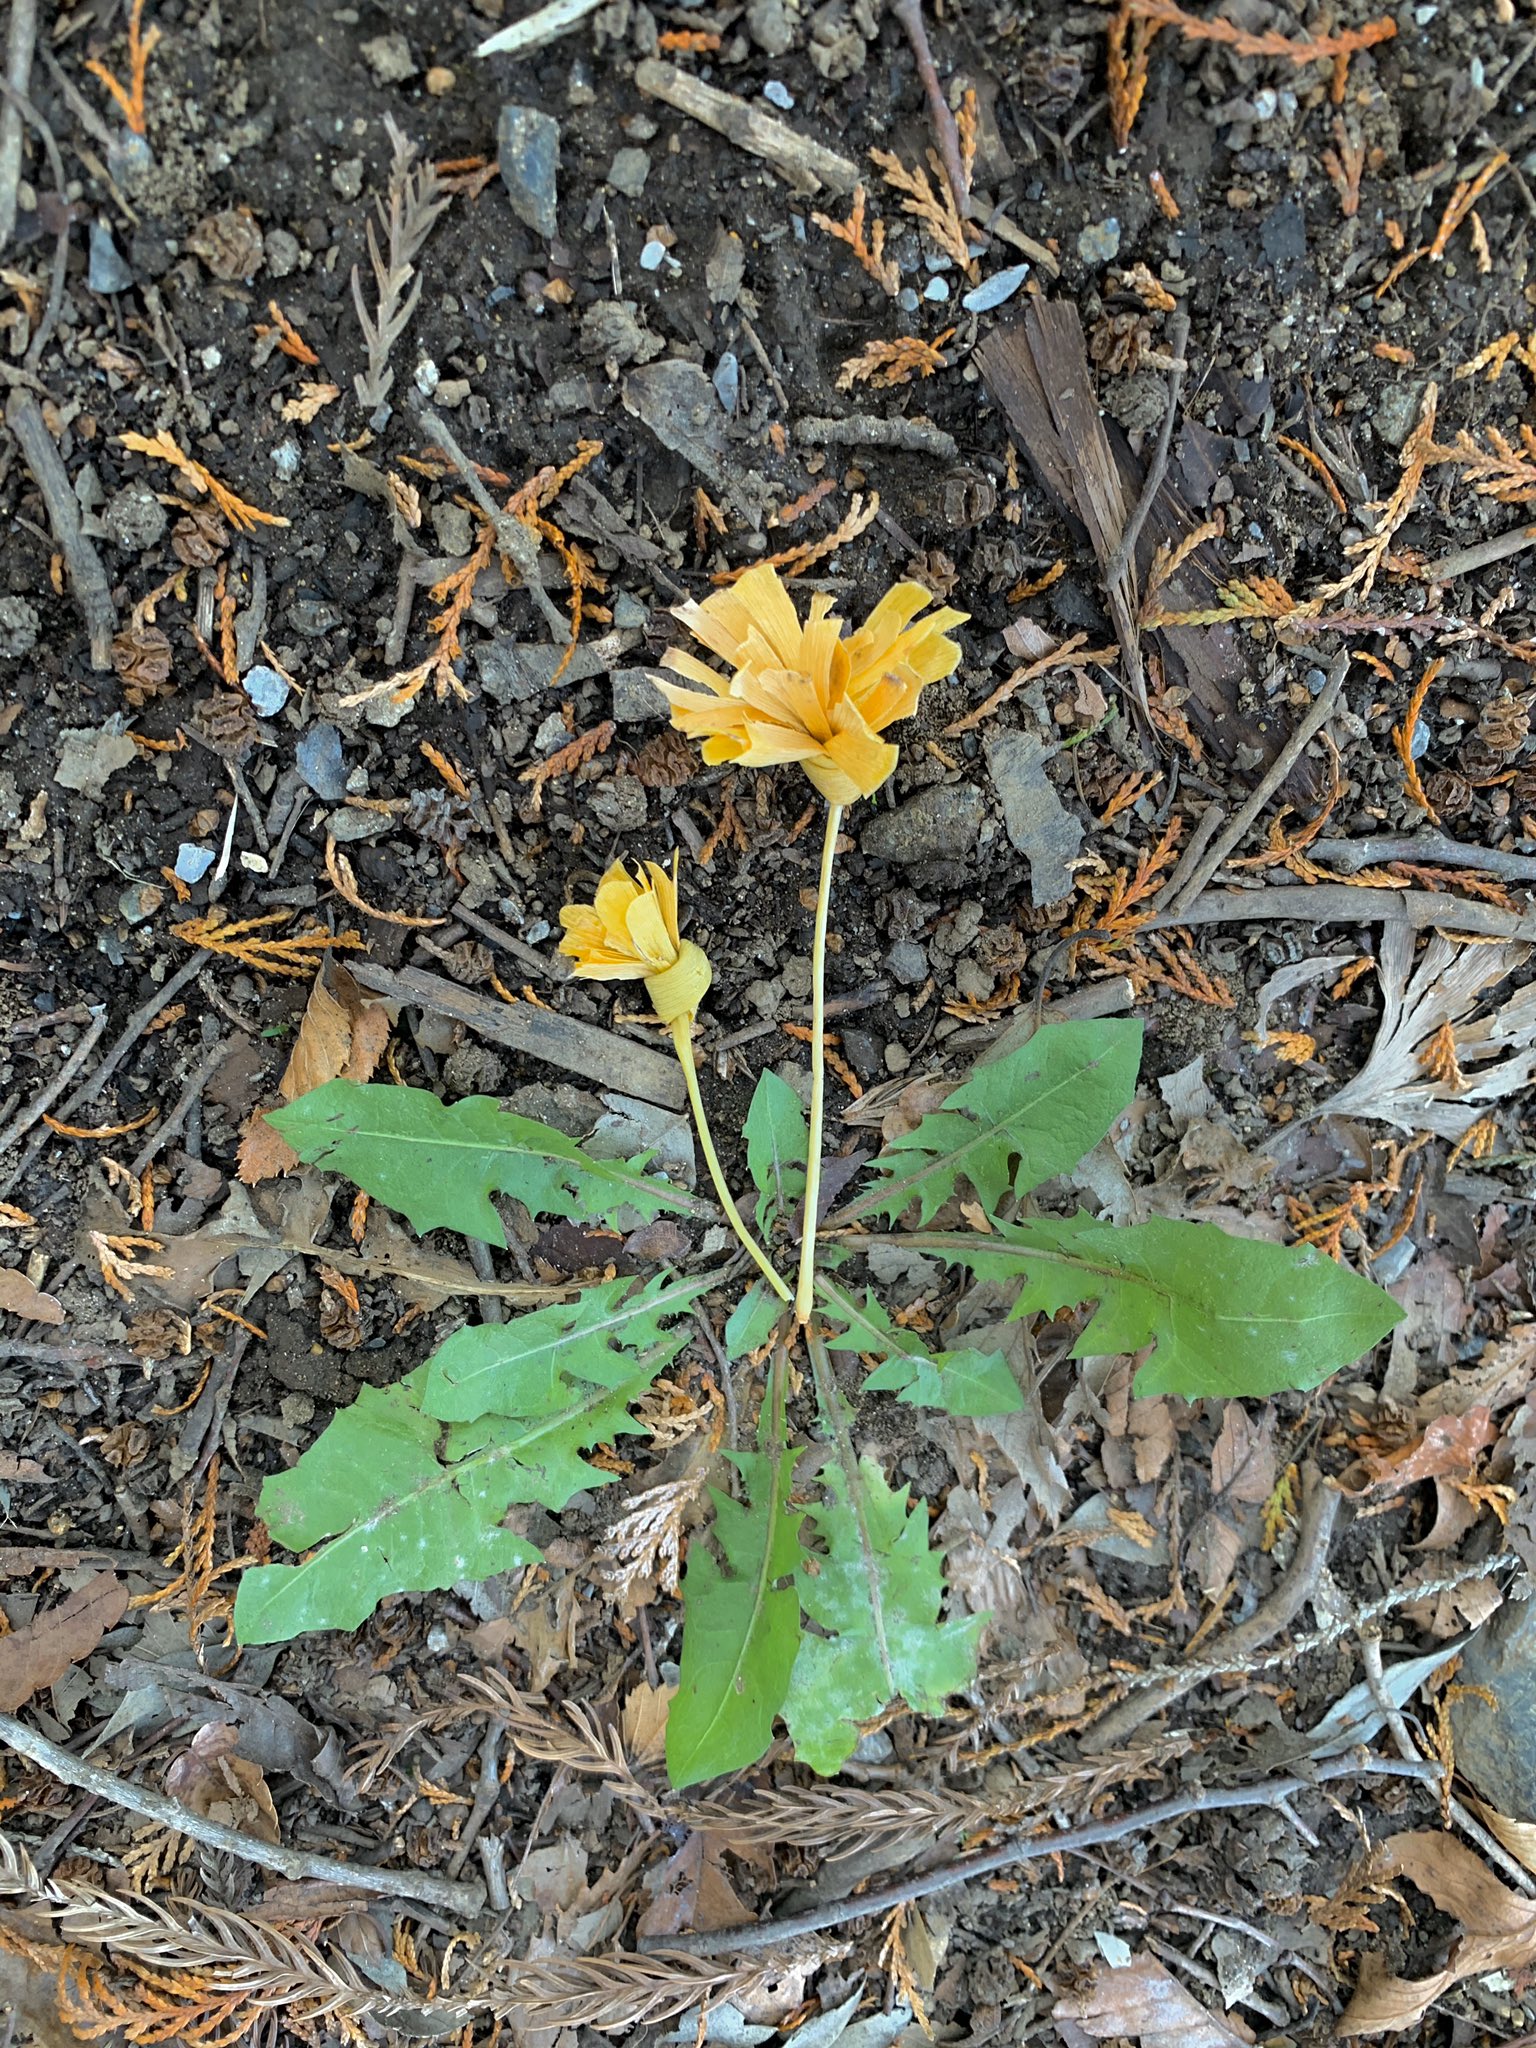 Inori イチョウでタンポポを作りました 面積の広いイチョウ の葉を使います 半分に折り更に蛇腹に折り 葉の下の方をもみもみ 柄ではなく葉でひと結びします 花びらは短くても大丈夫なのでガクをしっかり作ります 花弁 を割いてタンポポの花です 緑っ